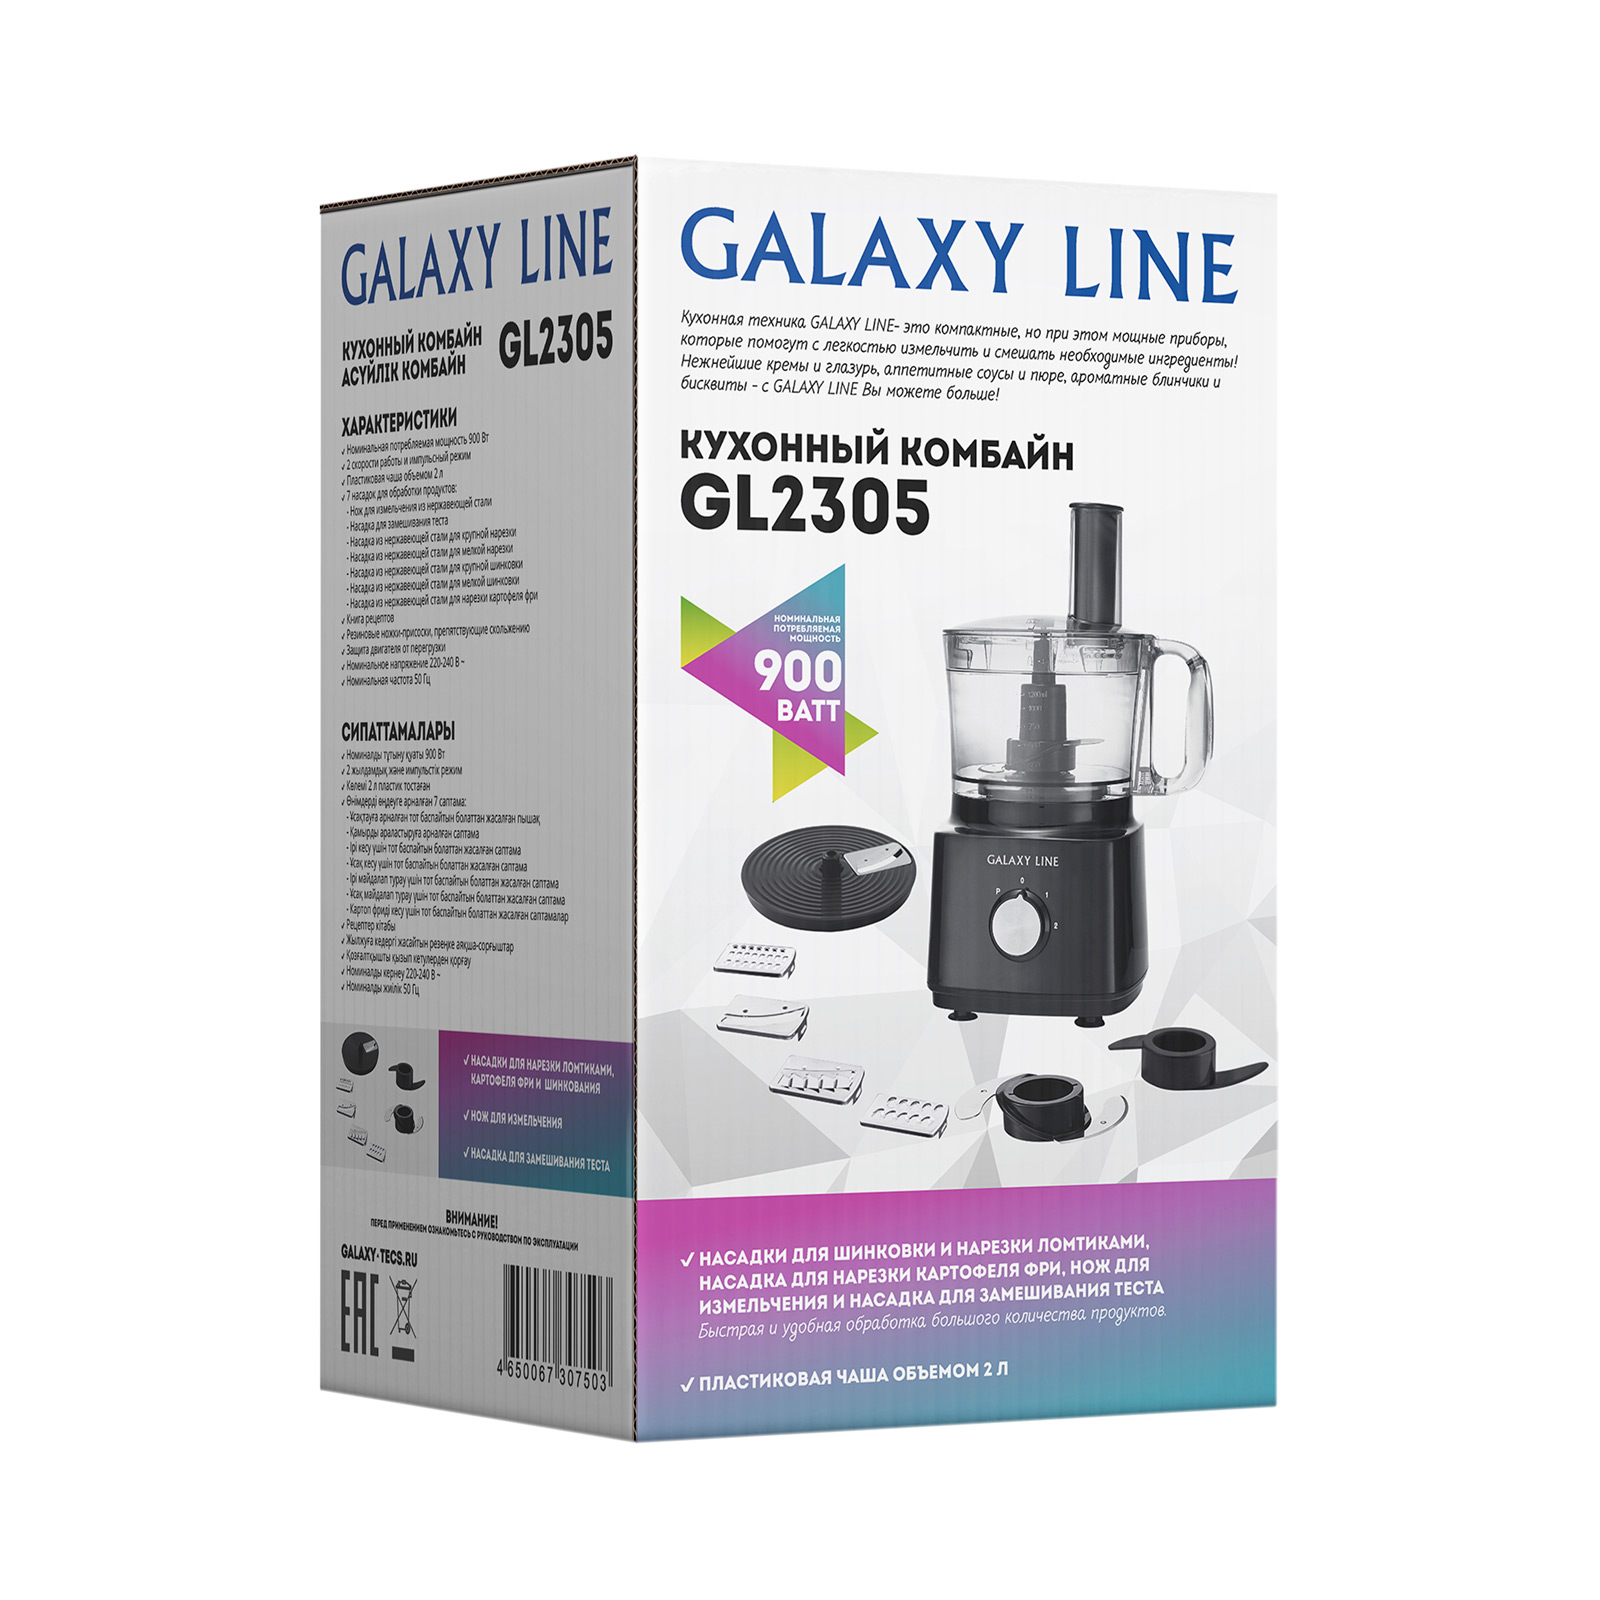  комбайн GALAXY GL2305,  , цены в интернет .